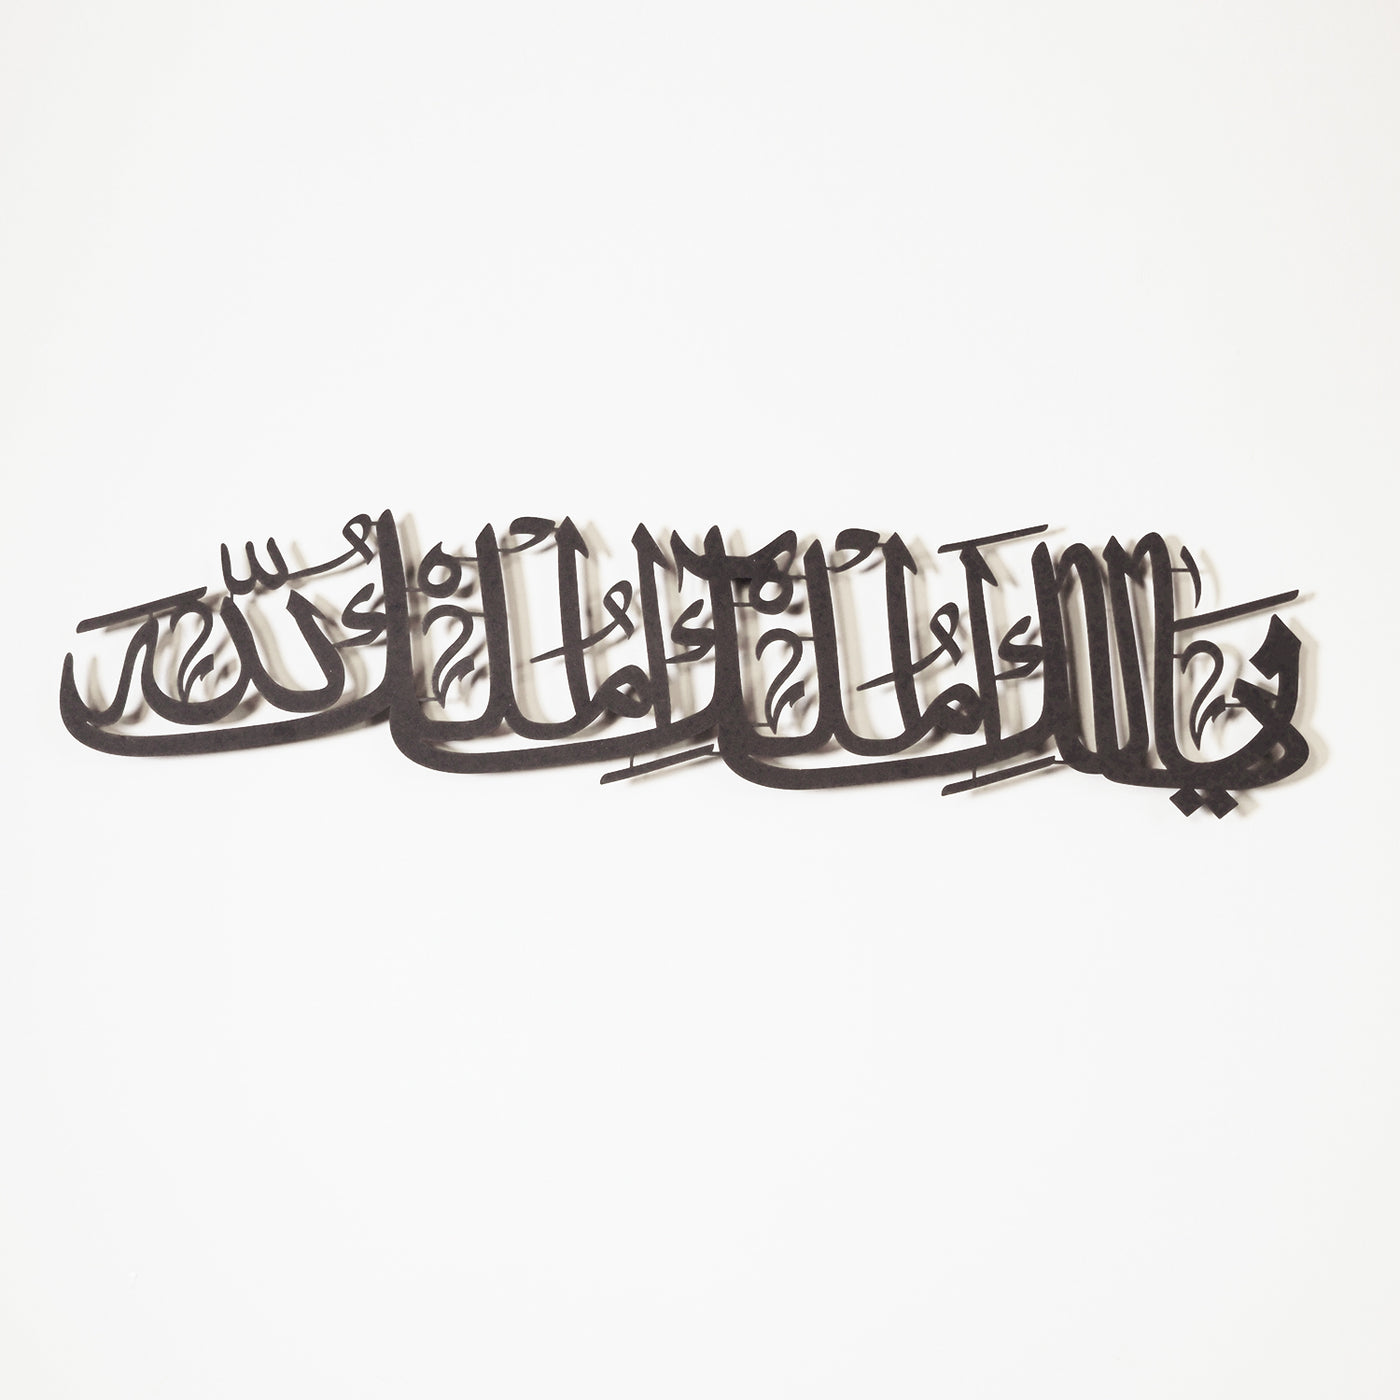 Mülk Allah'ındır (Ya Malikel Mülk, El Mülkü Lillah) Yazılı Metal Duvar Tablosu - WAM209